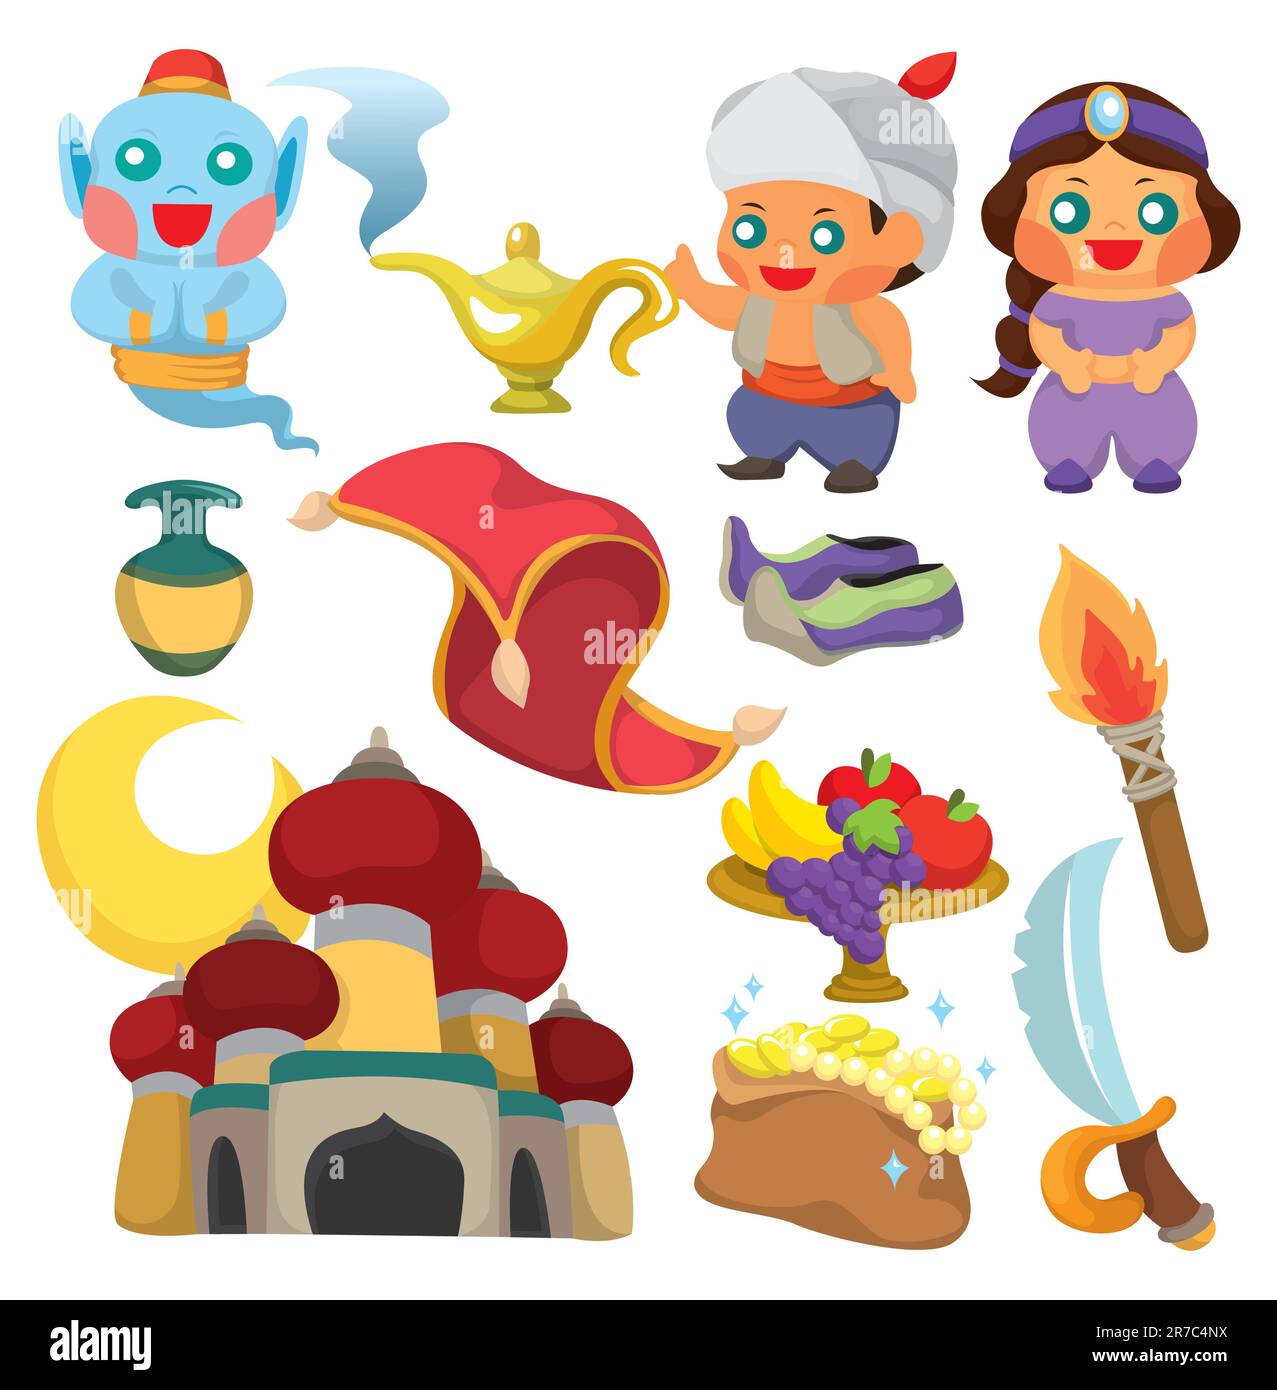 Aladdin cartoon Stock Vector Images - Alamy